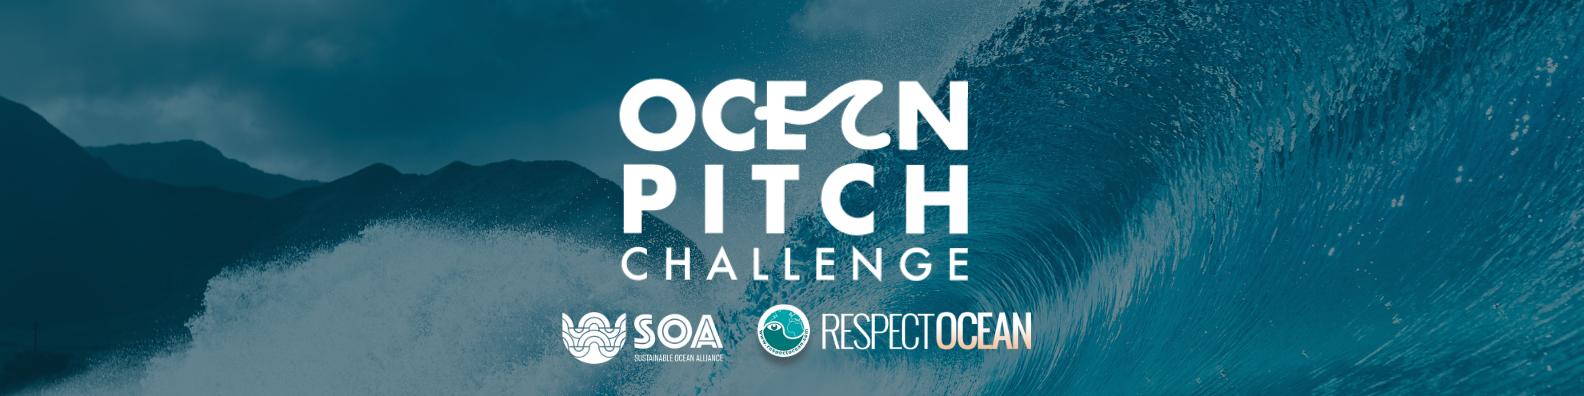 Ocean pitch challenge®